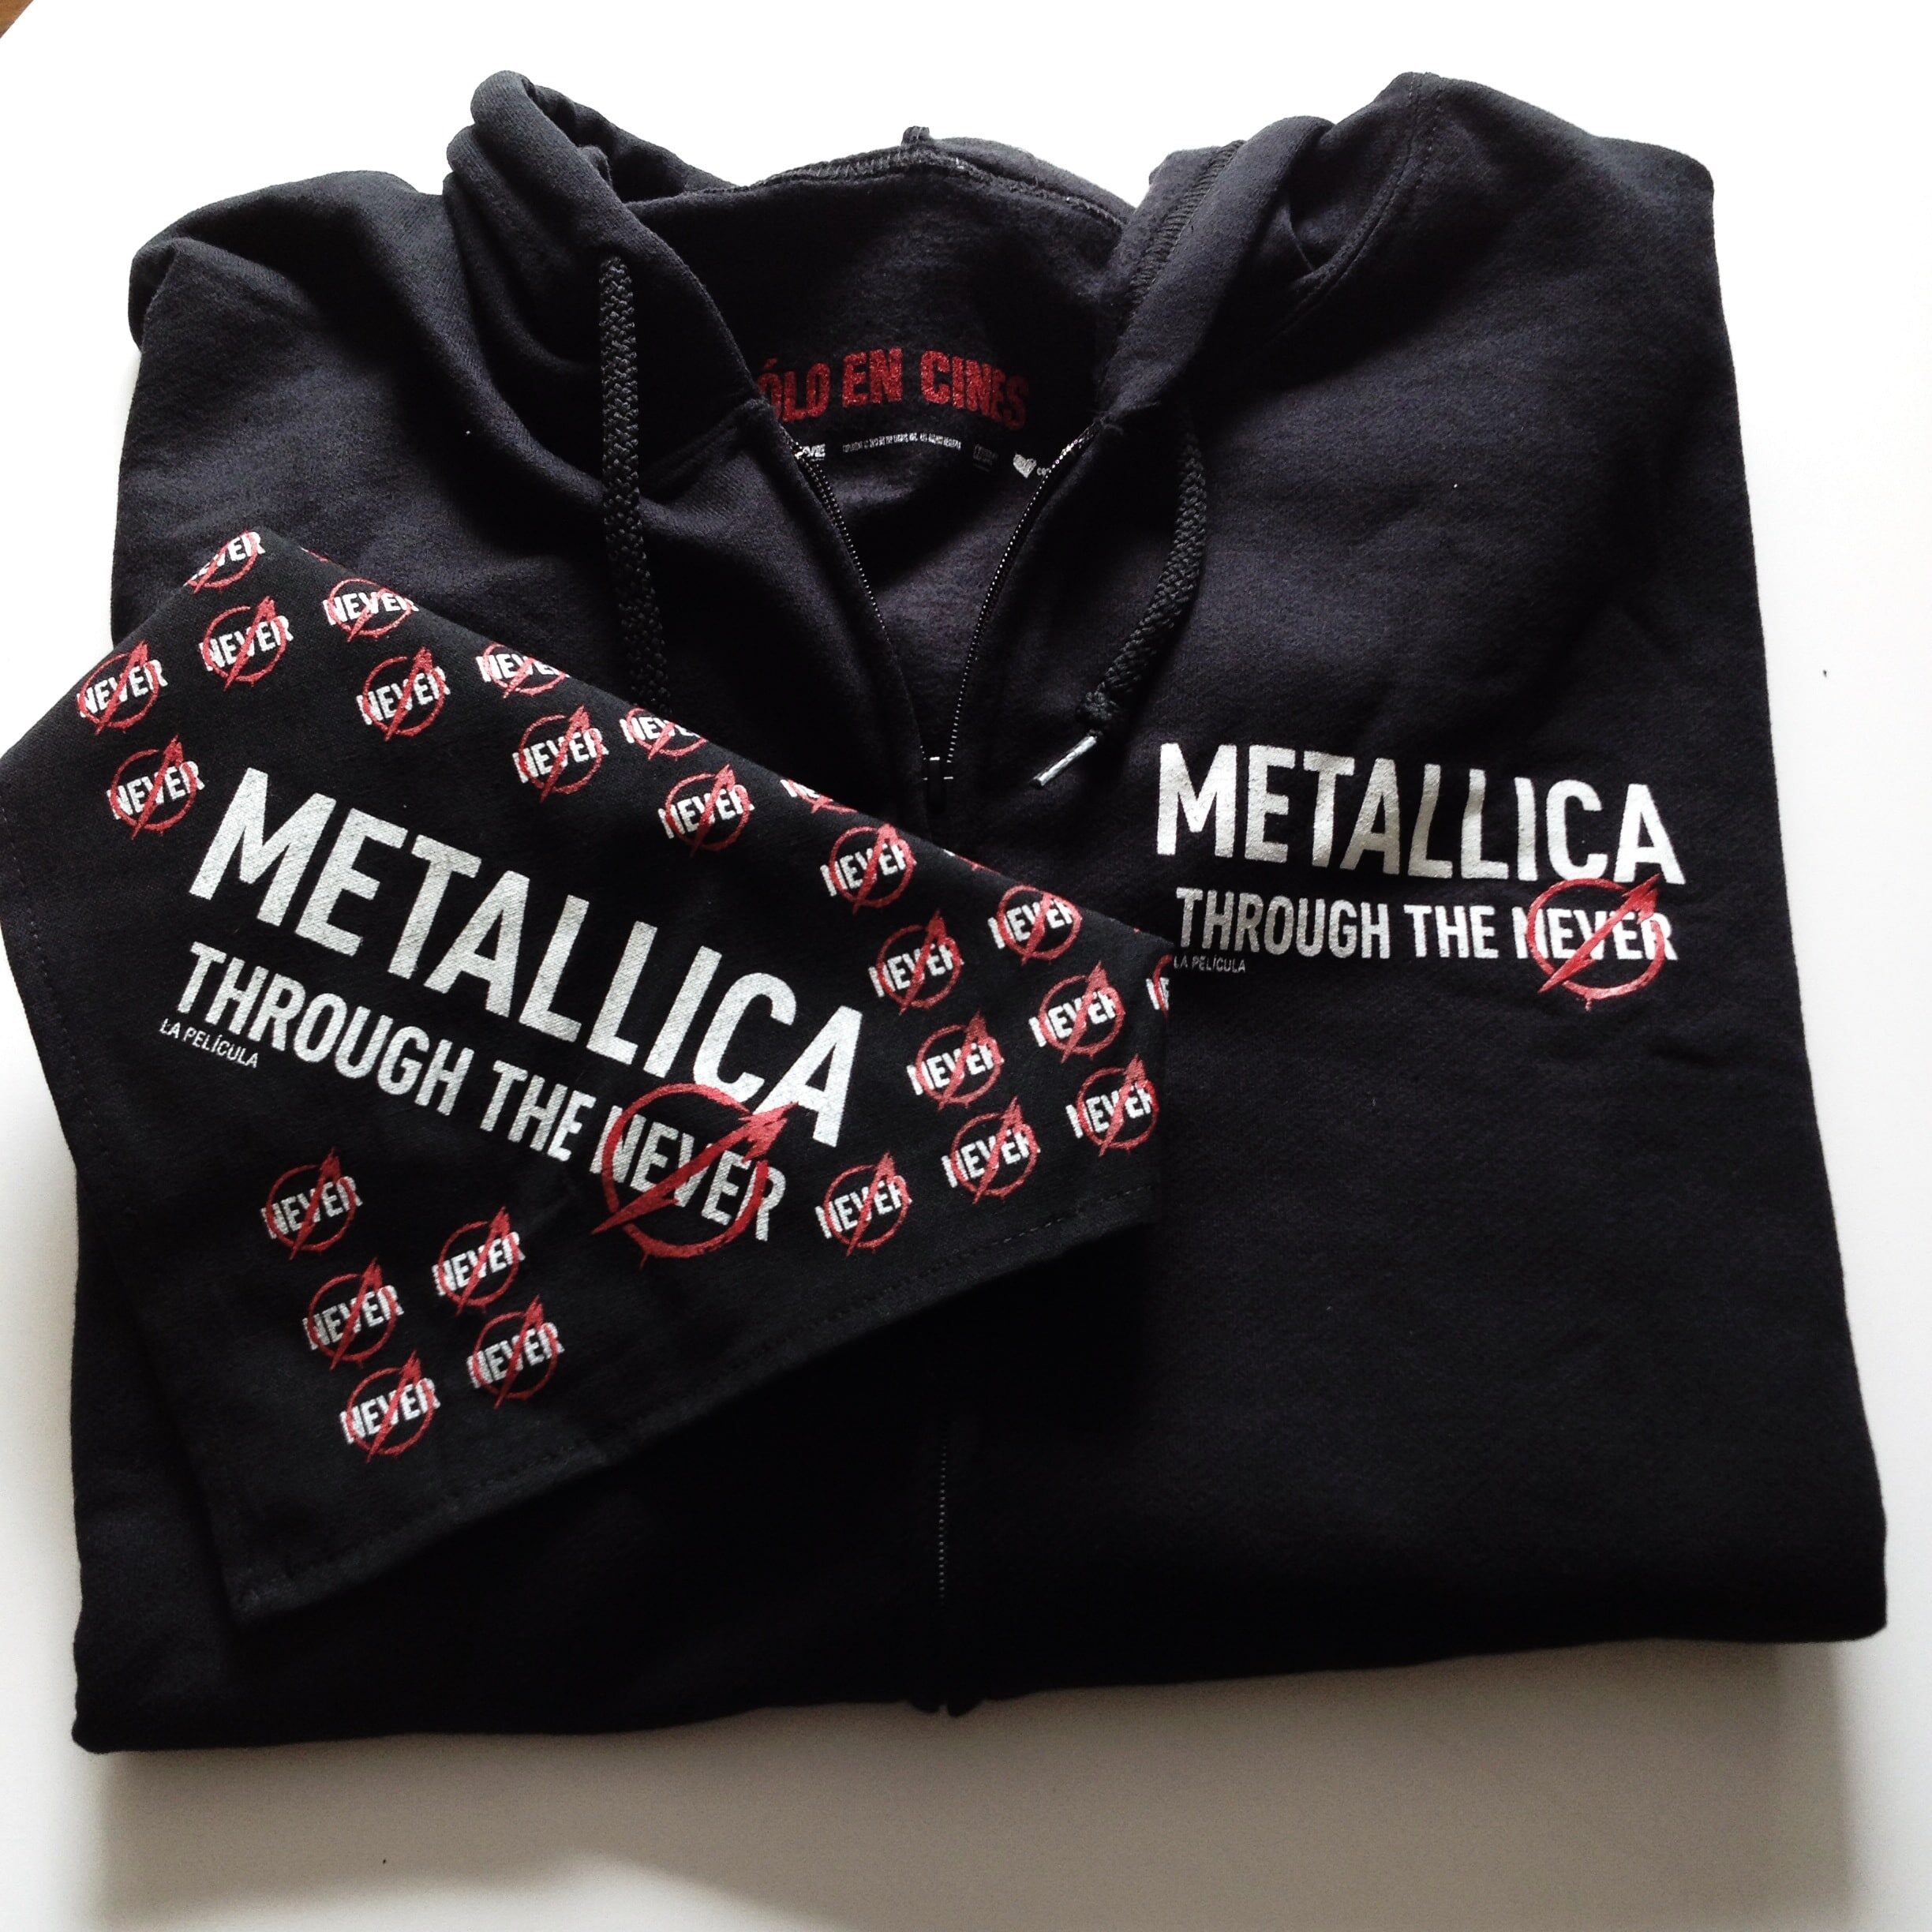 Llévate un regalo muy especial de Metallica